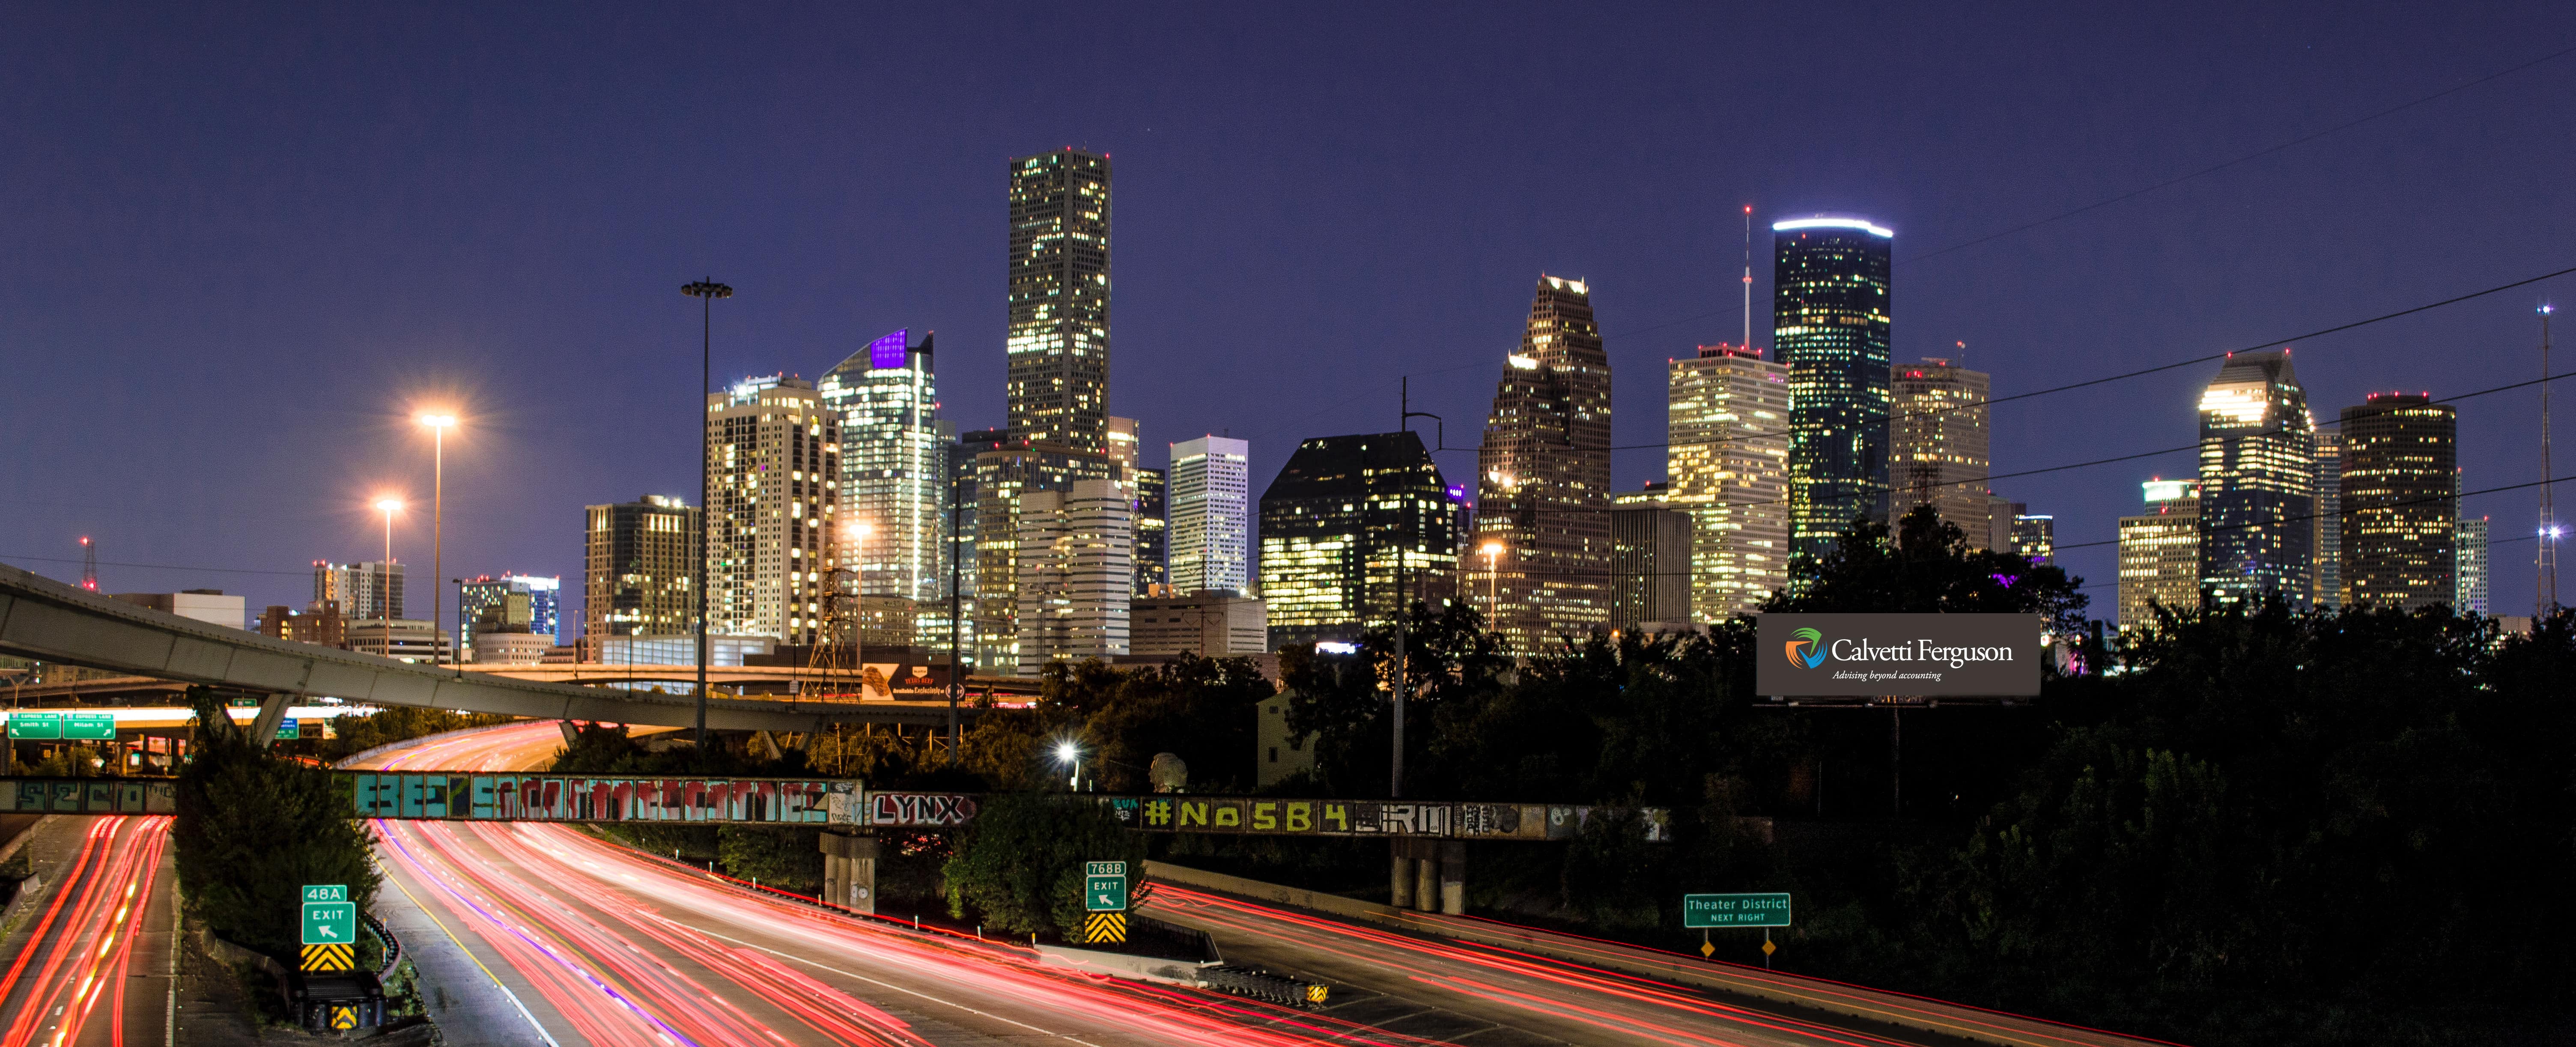 Calvetti Ferguson named a Houston Top Accounting Firm